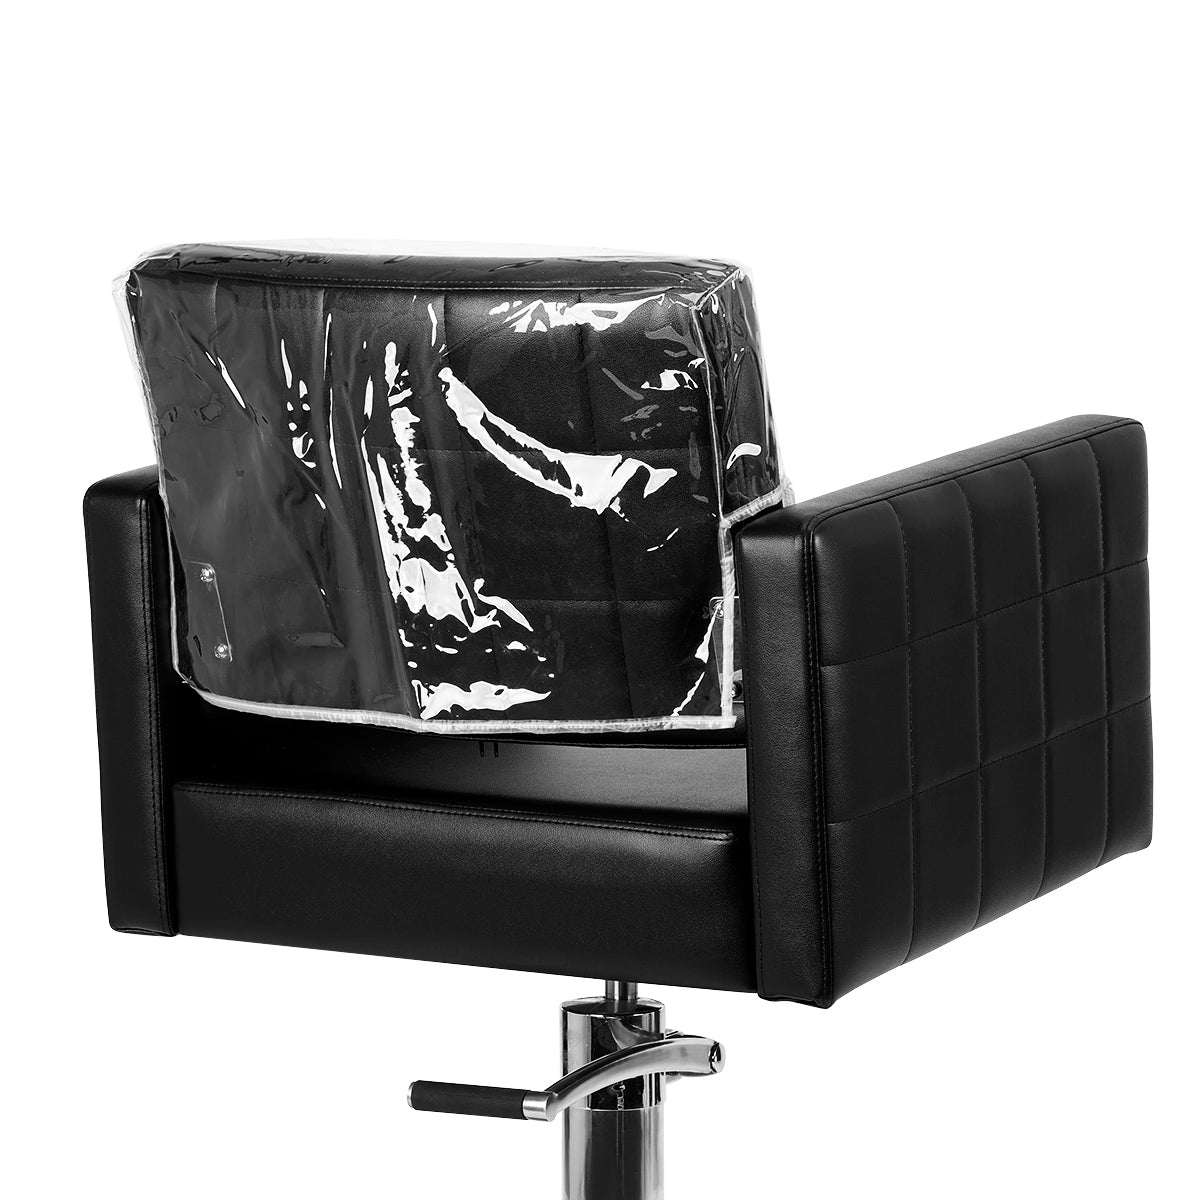 Foil backrest cover for hairdressing chair